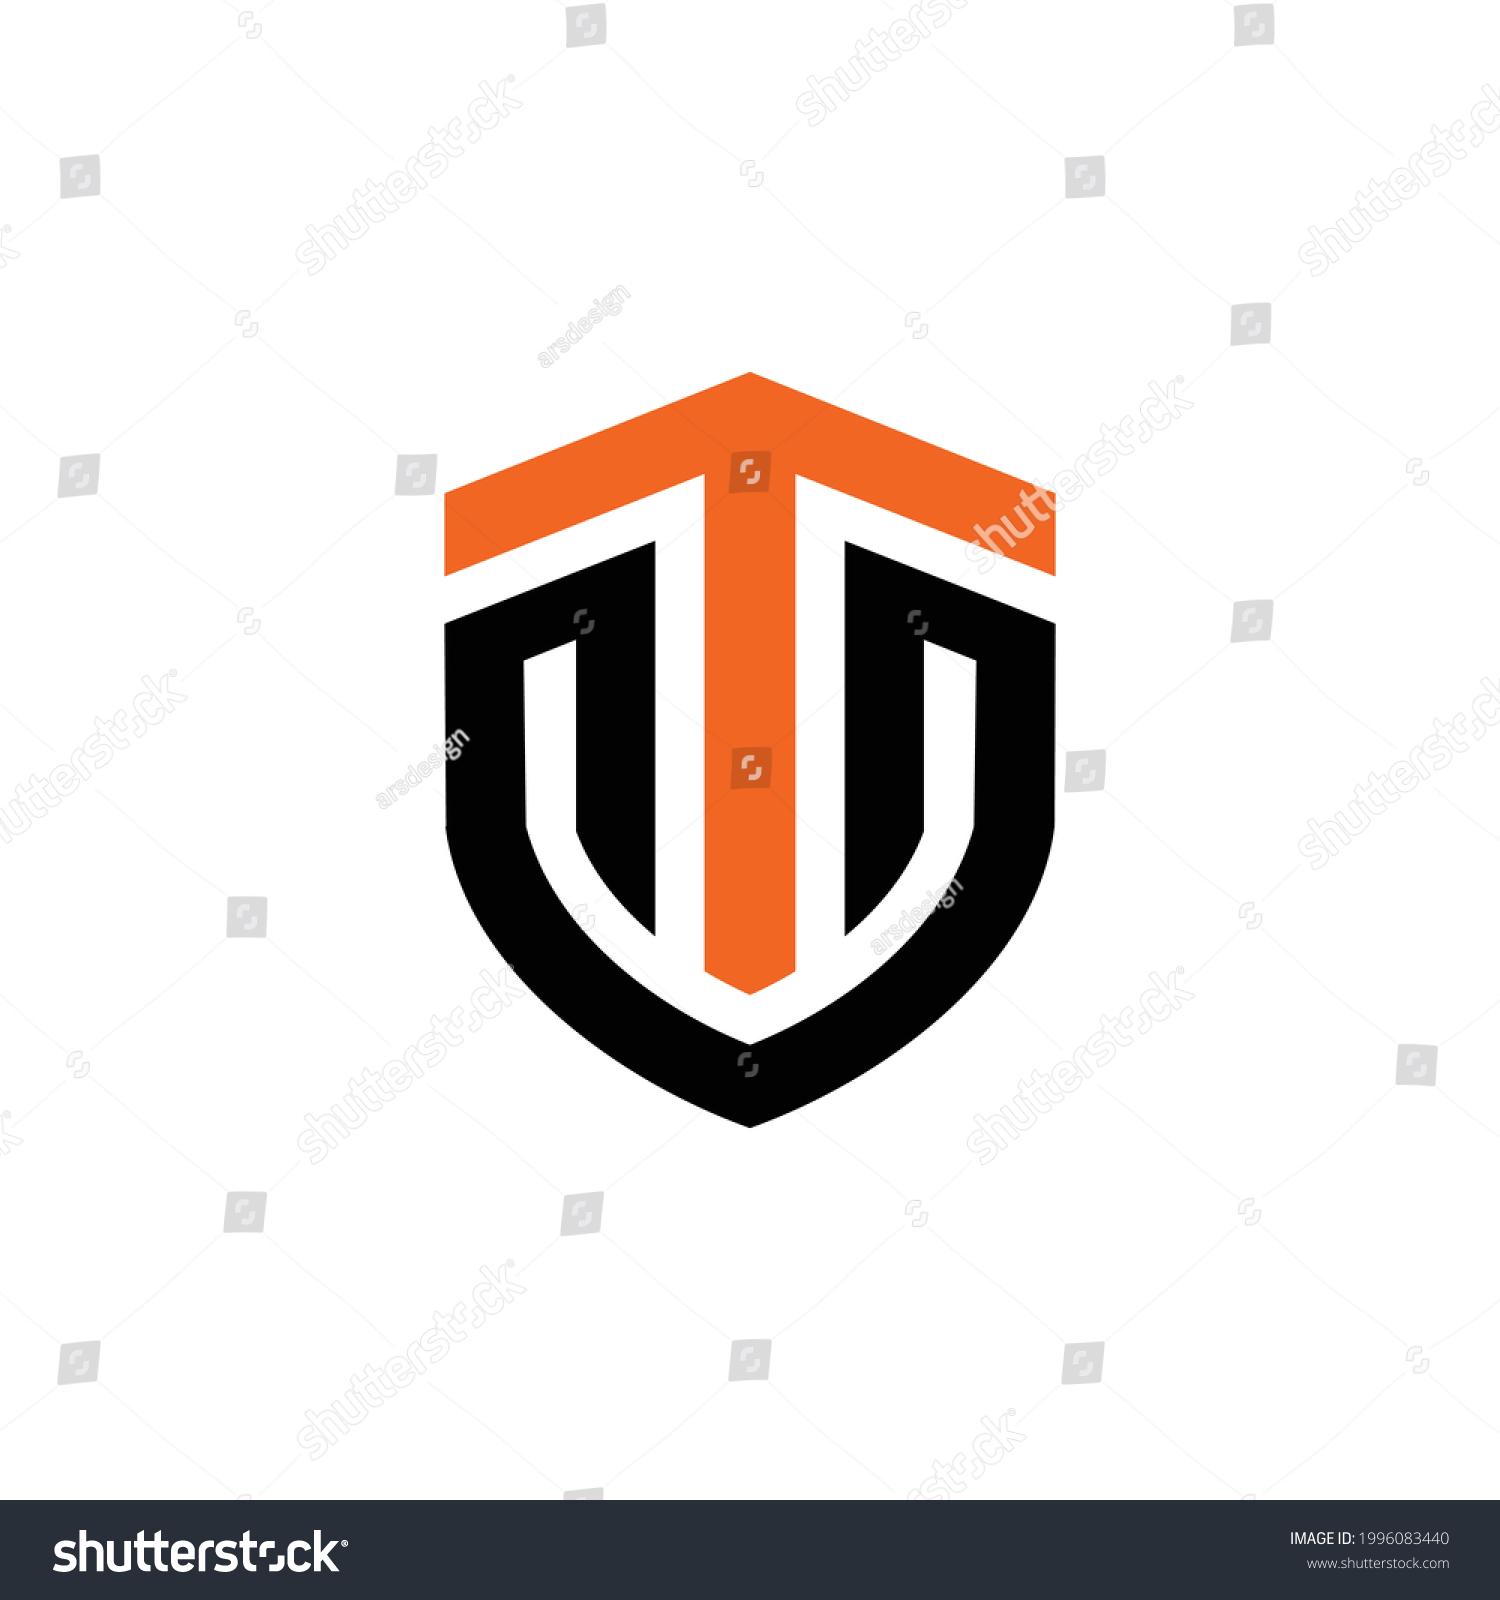 13,873 T shield logo Images, Stock Photos & Vectors | Shutterstock